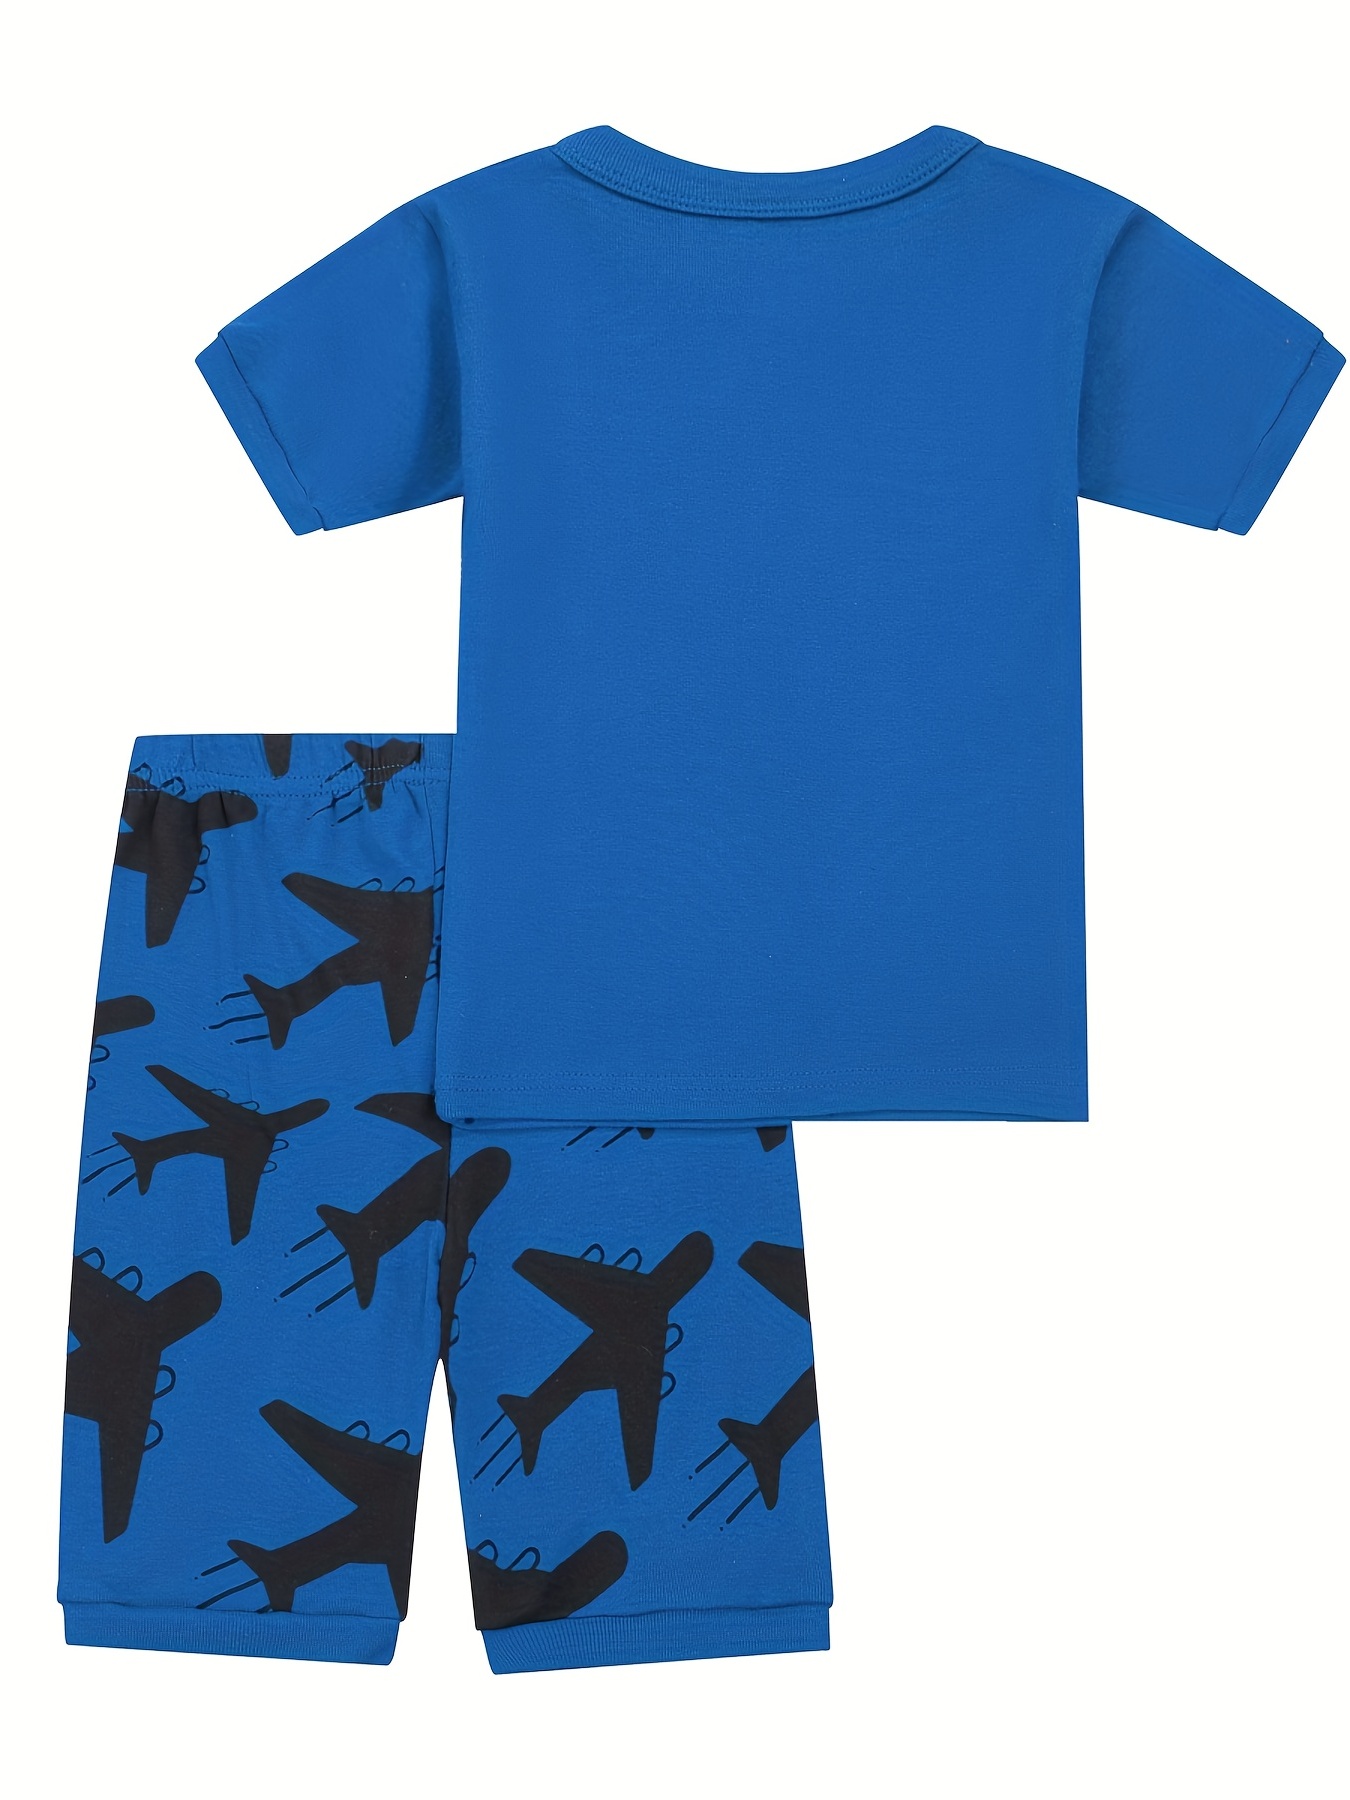 Navy Blue Printed Kids Cotton T Shirt